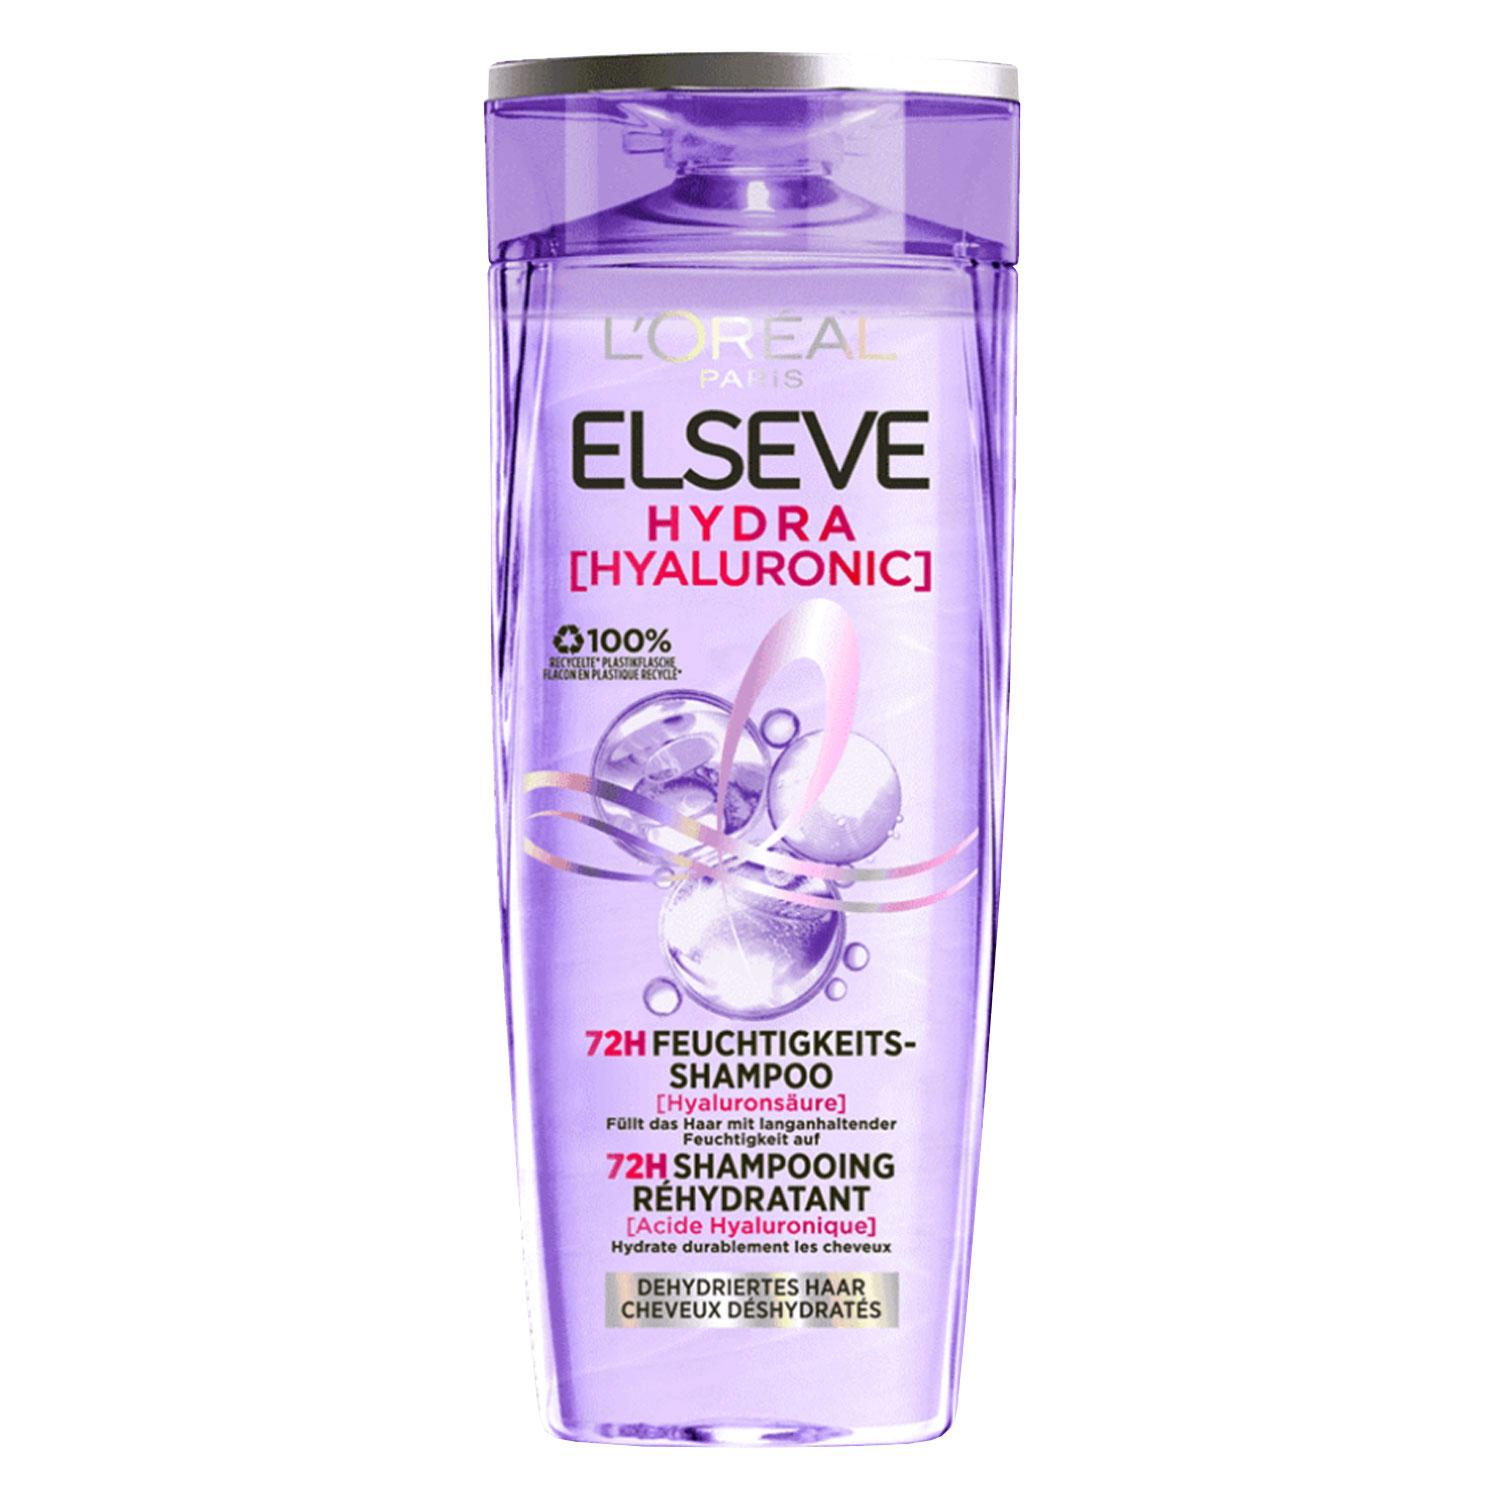 LOréal Elseve Haircare - Hydra Hyaluronic Shampooing Réhydratant 72H